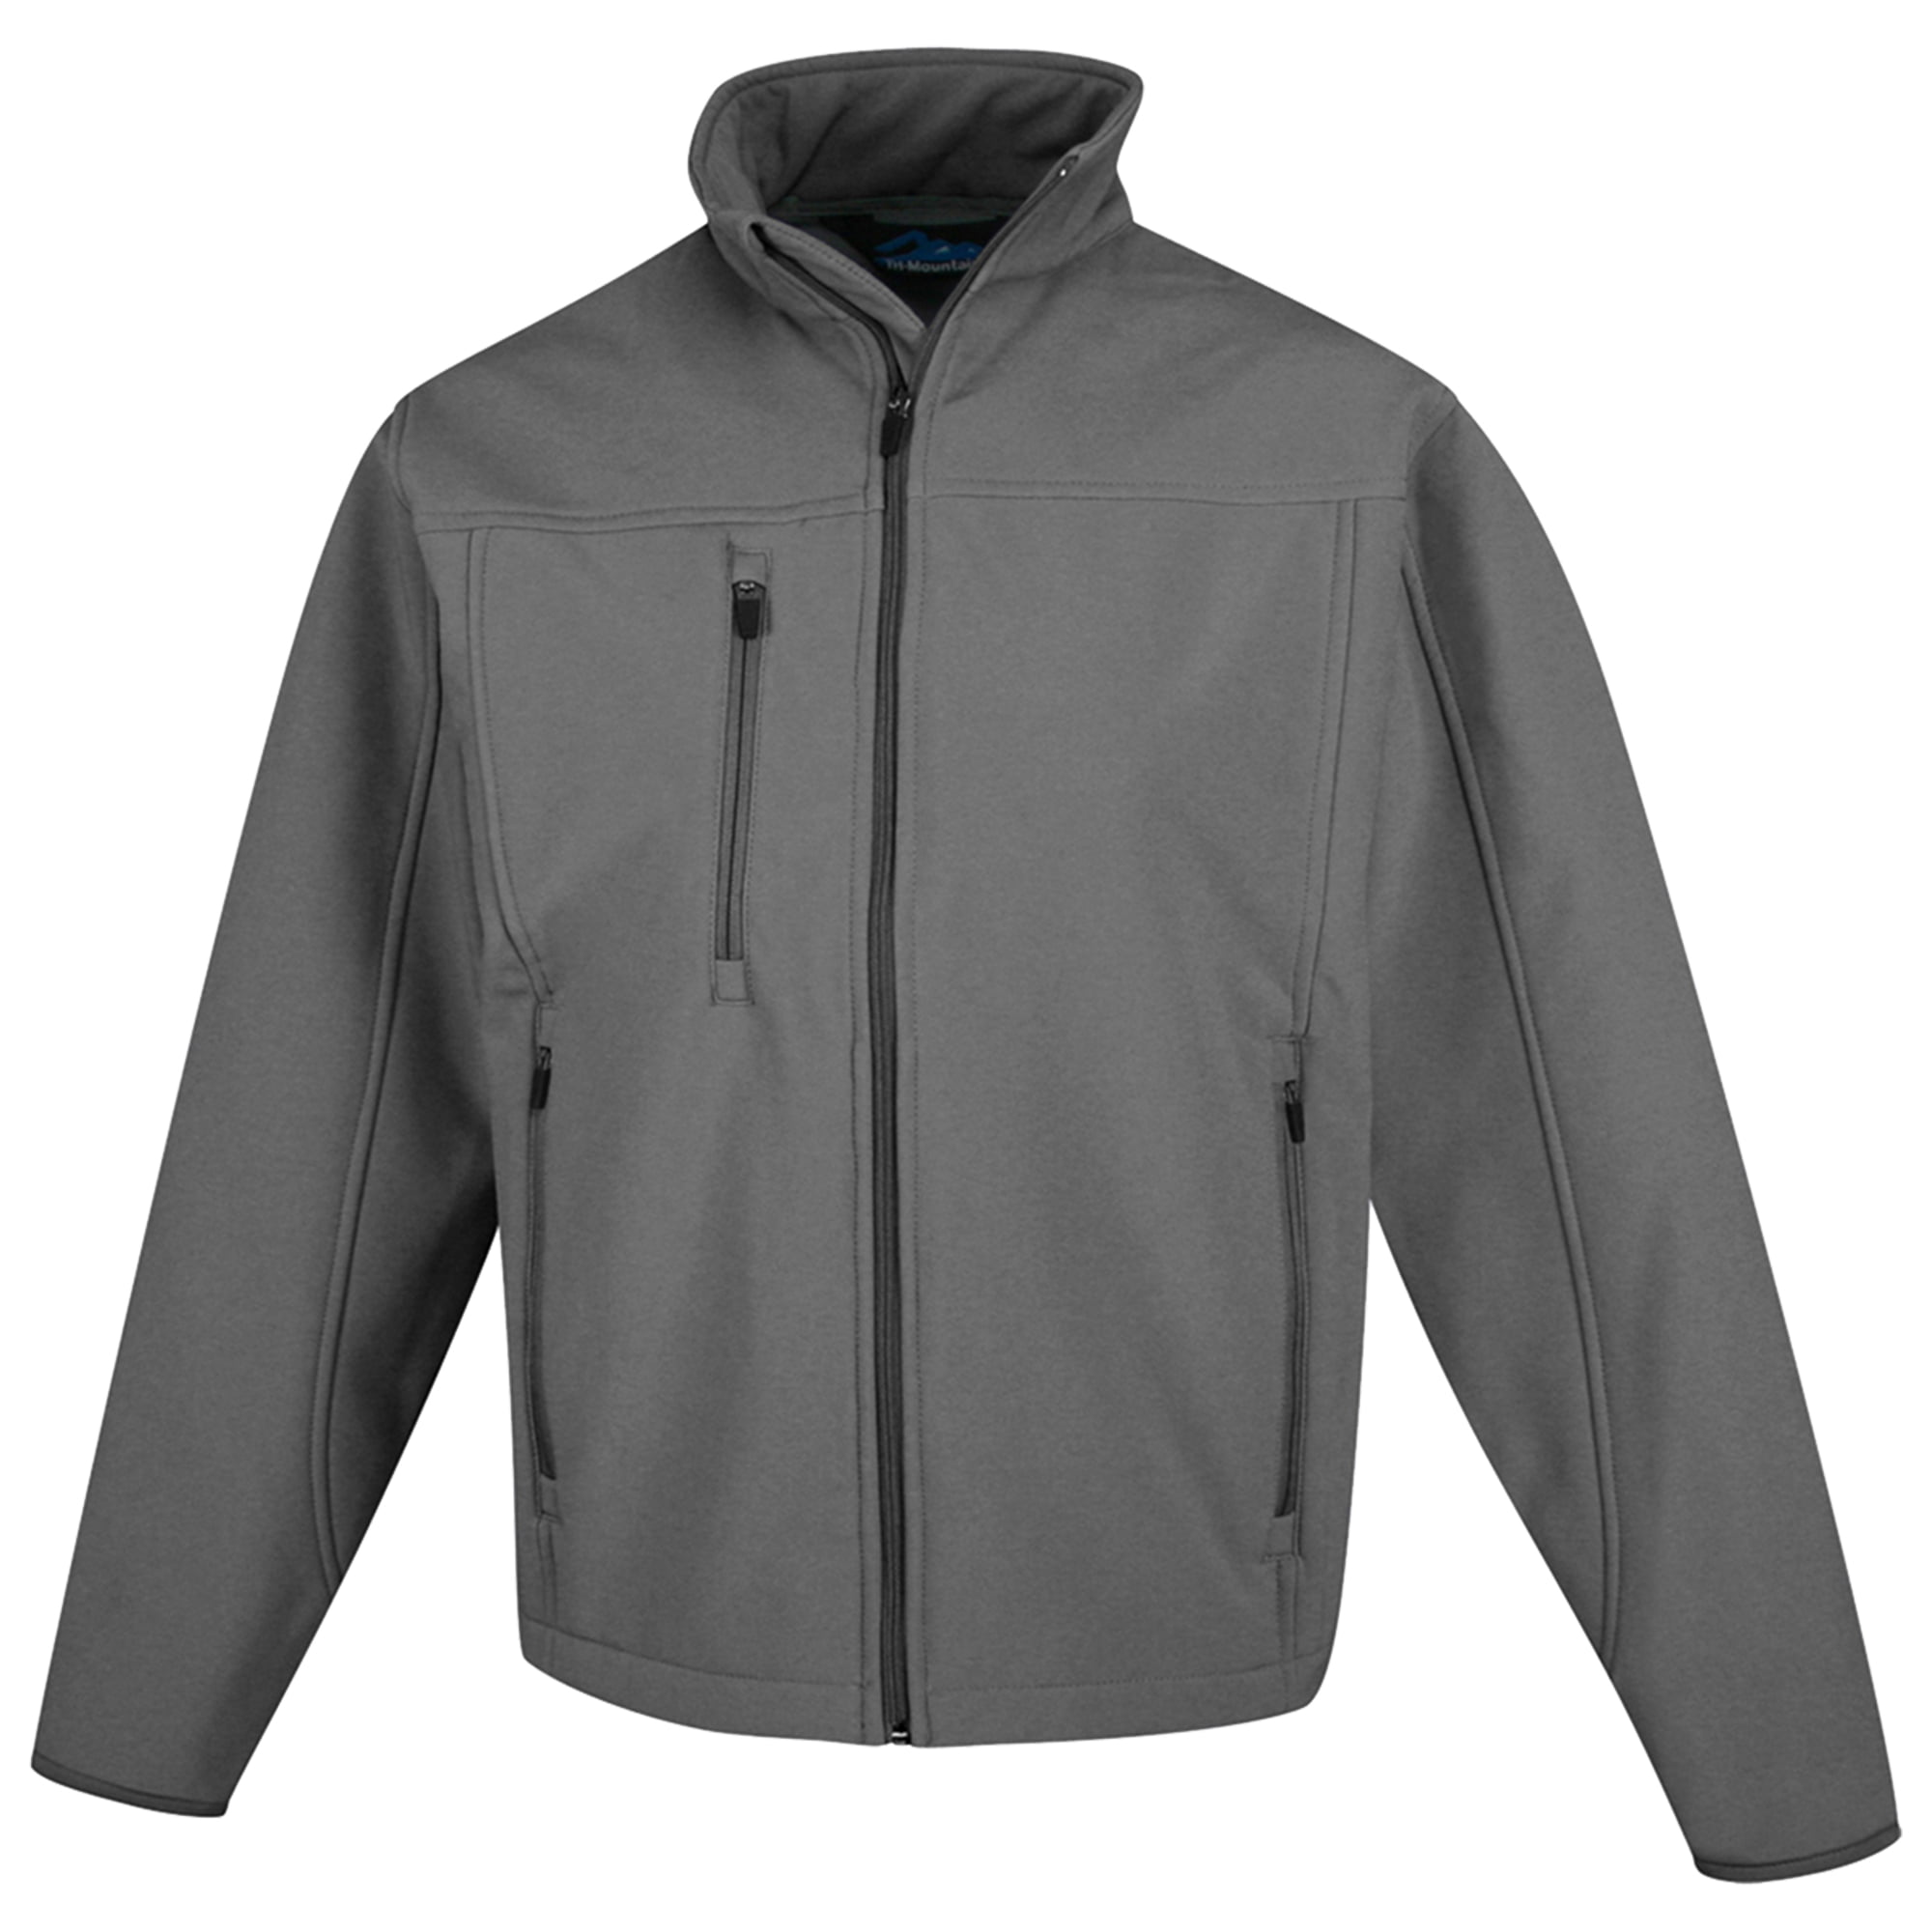 New Men's Reebok Jacket/Coat Soft Shell Fur Lined